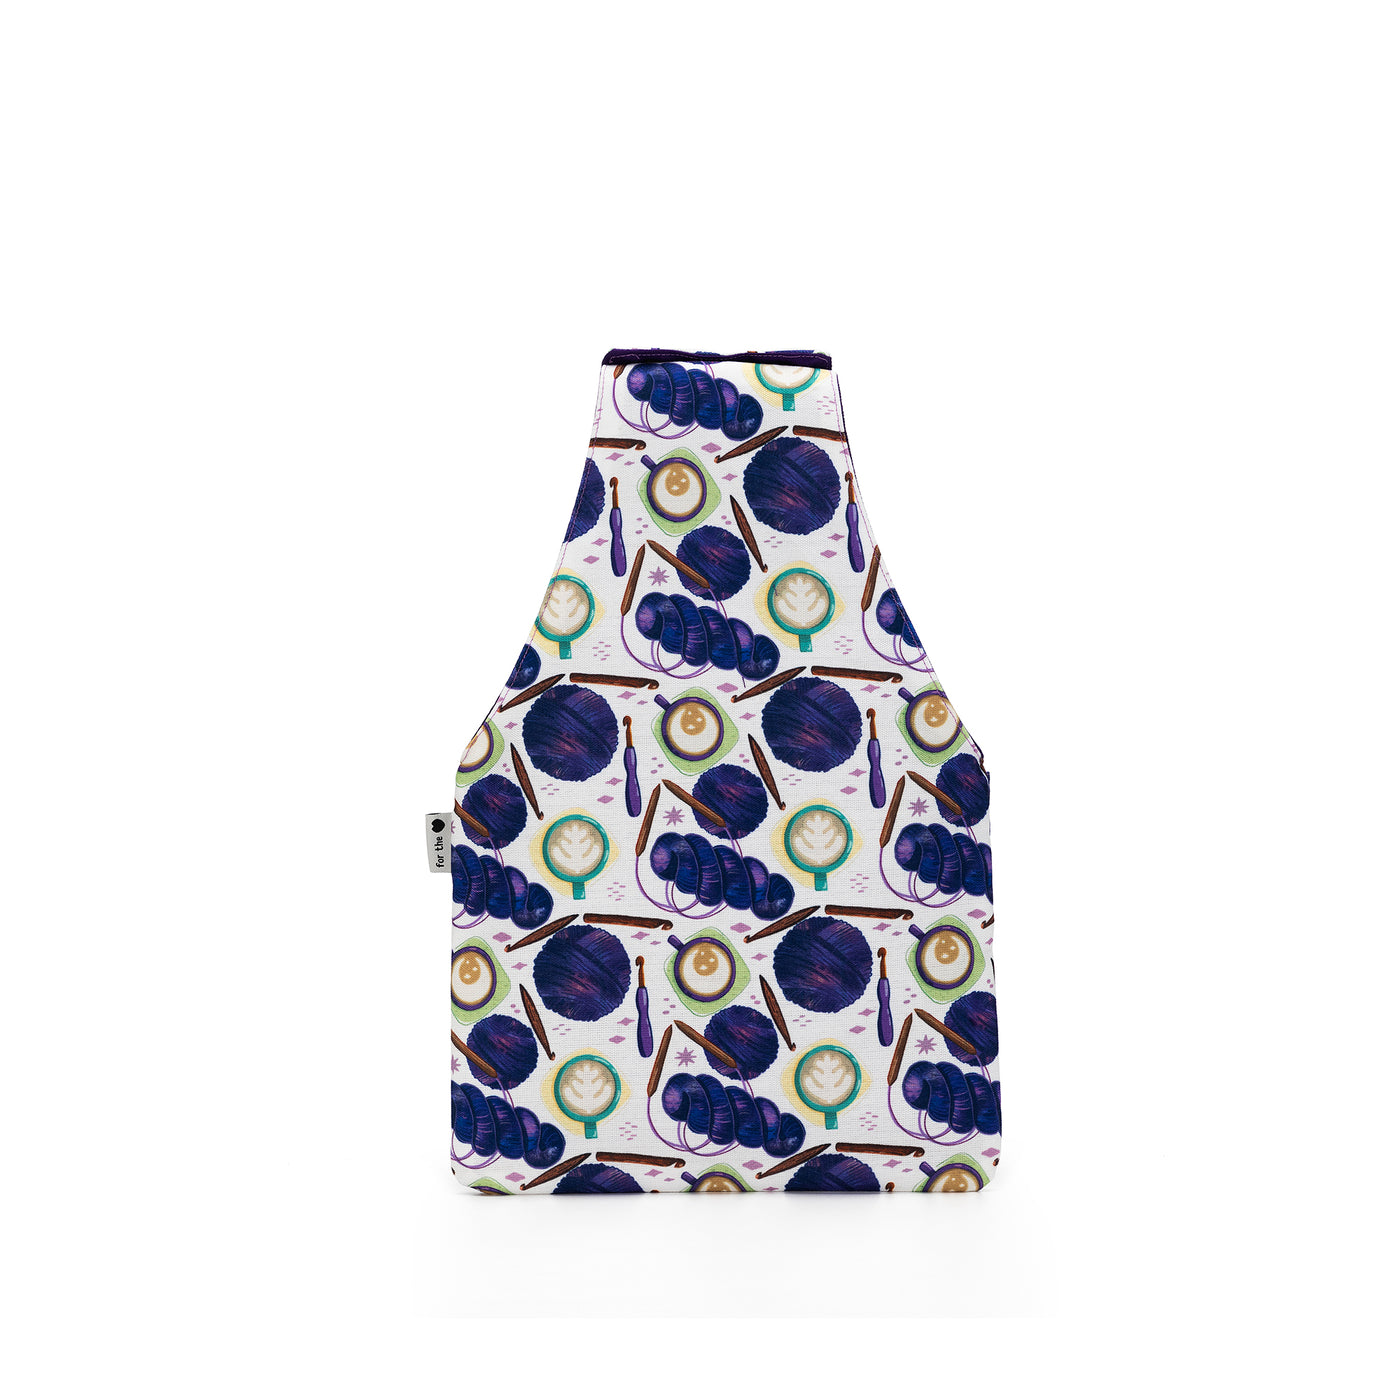 Nora Wrist Bag | Coffee and Yarn Green Fabric Print (PREORDER)